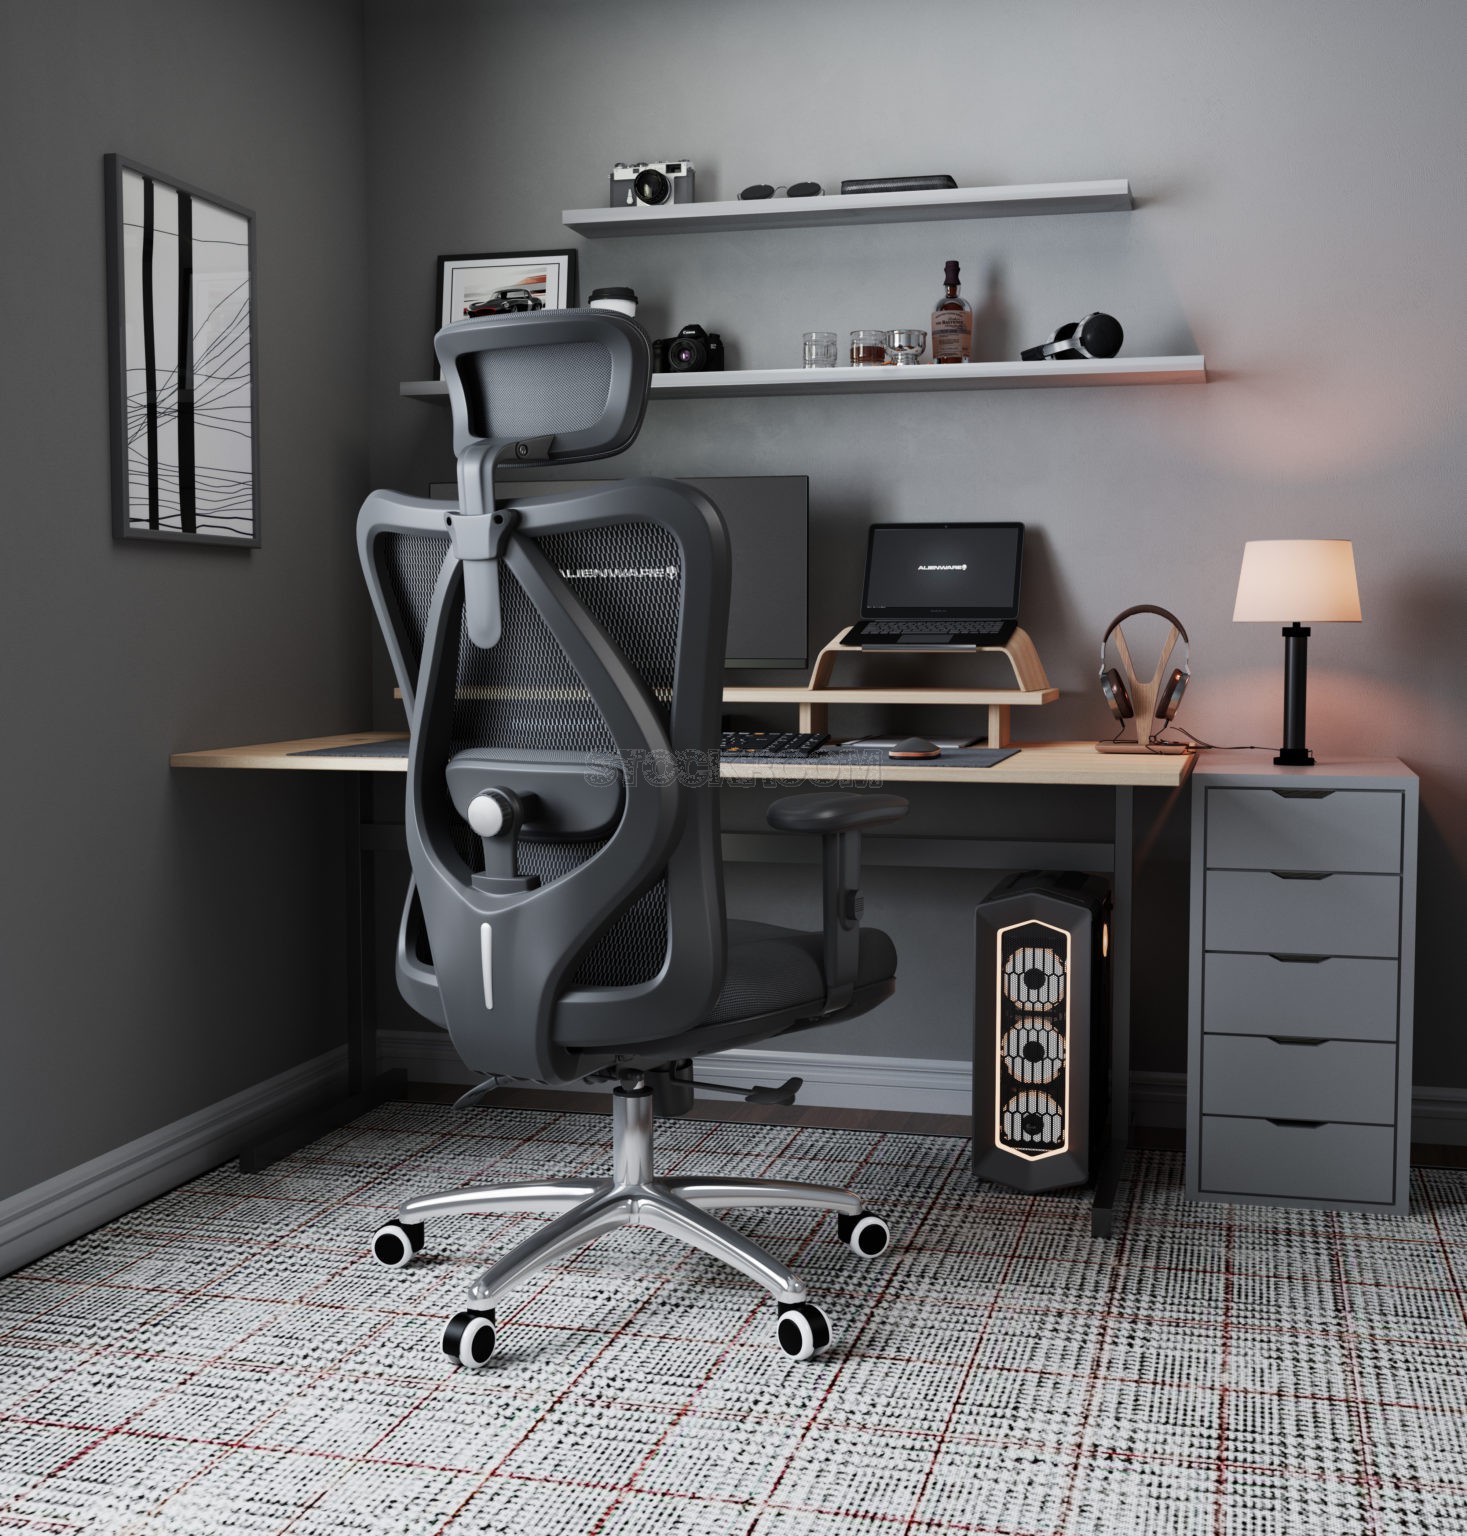 Dexter Style Ergonomic Mid-back Office Chair